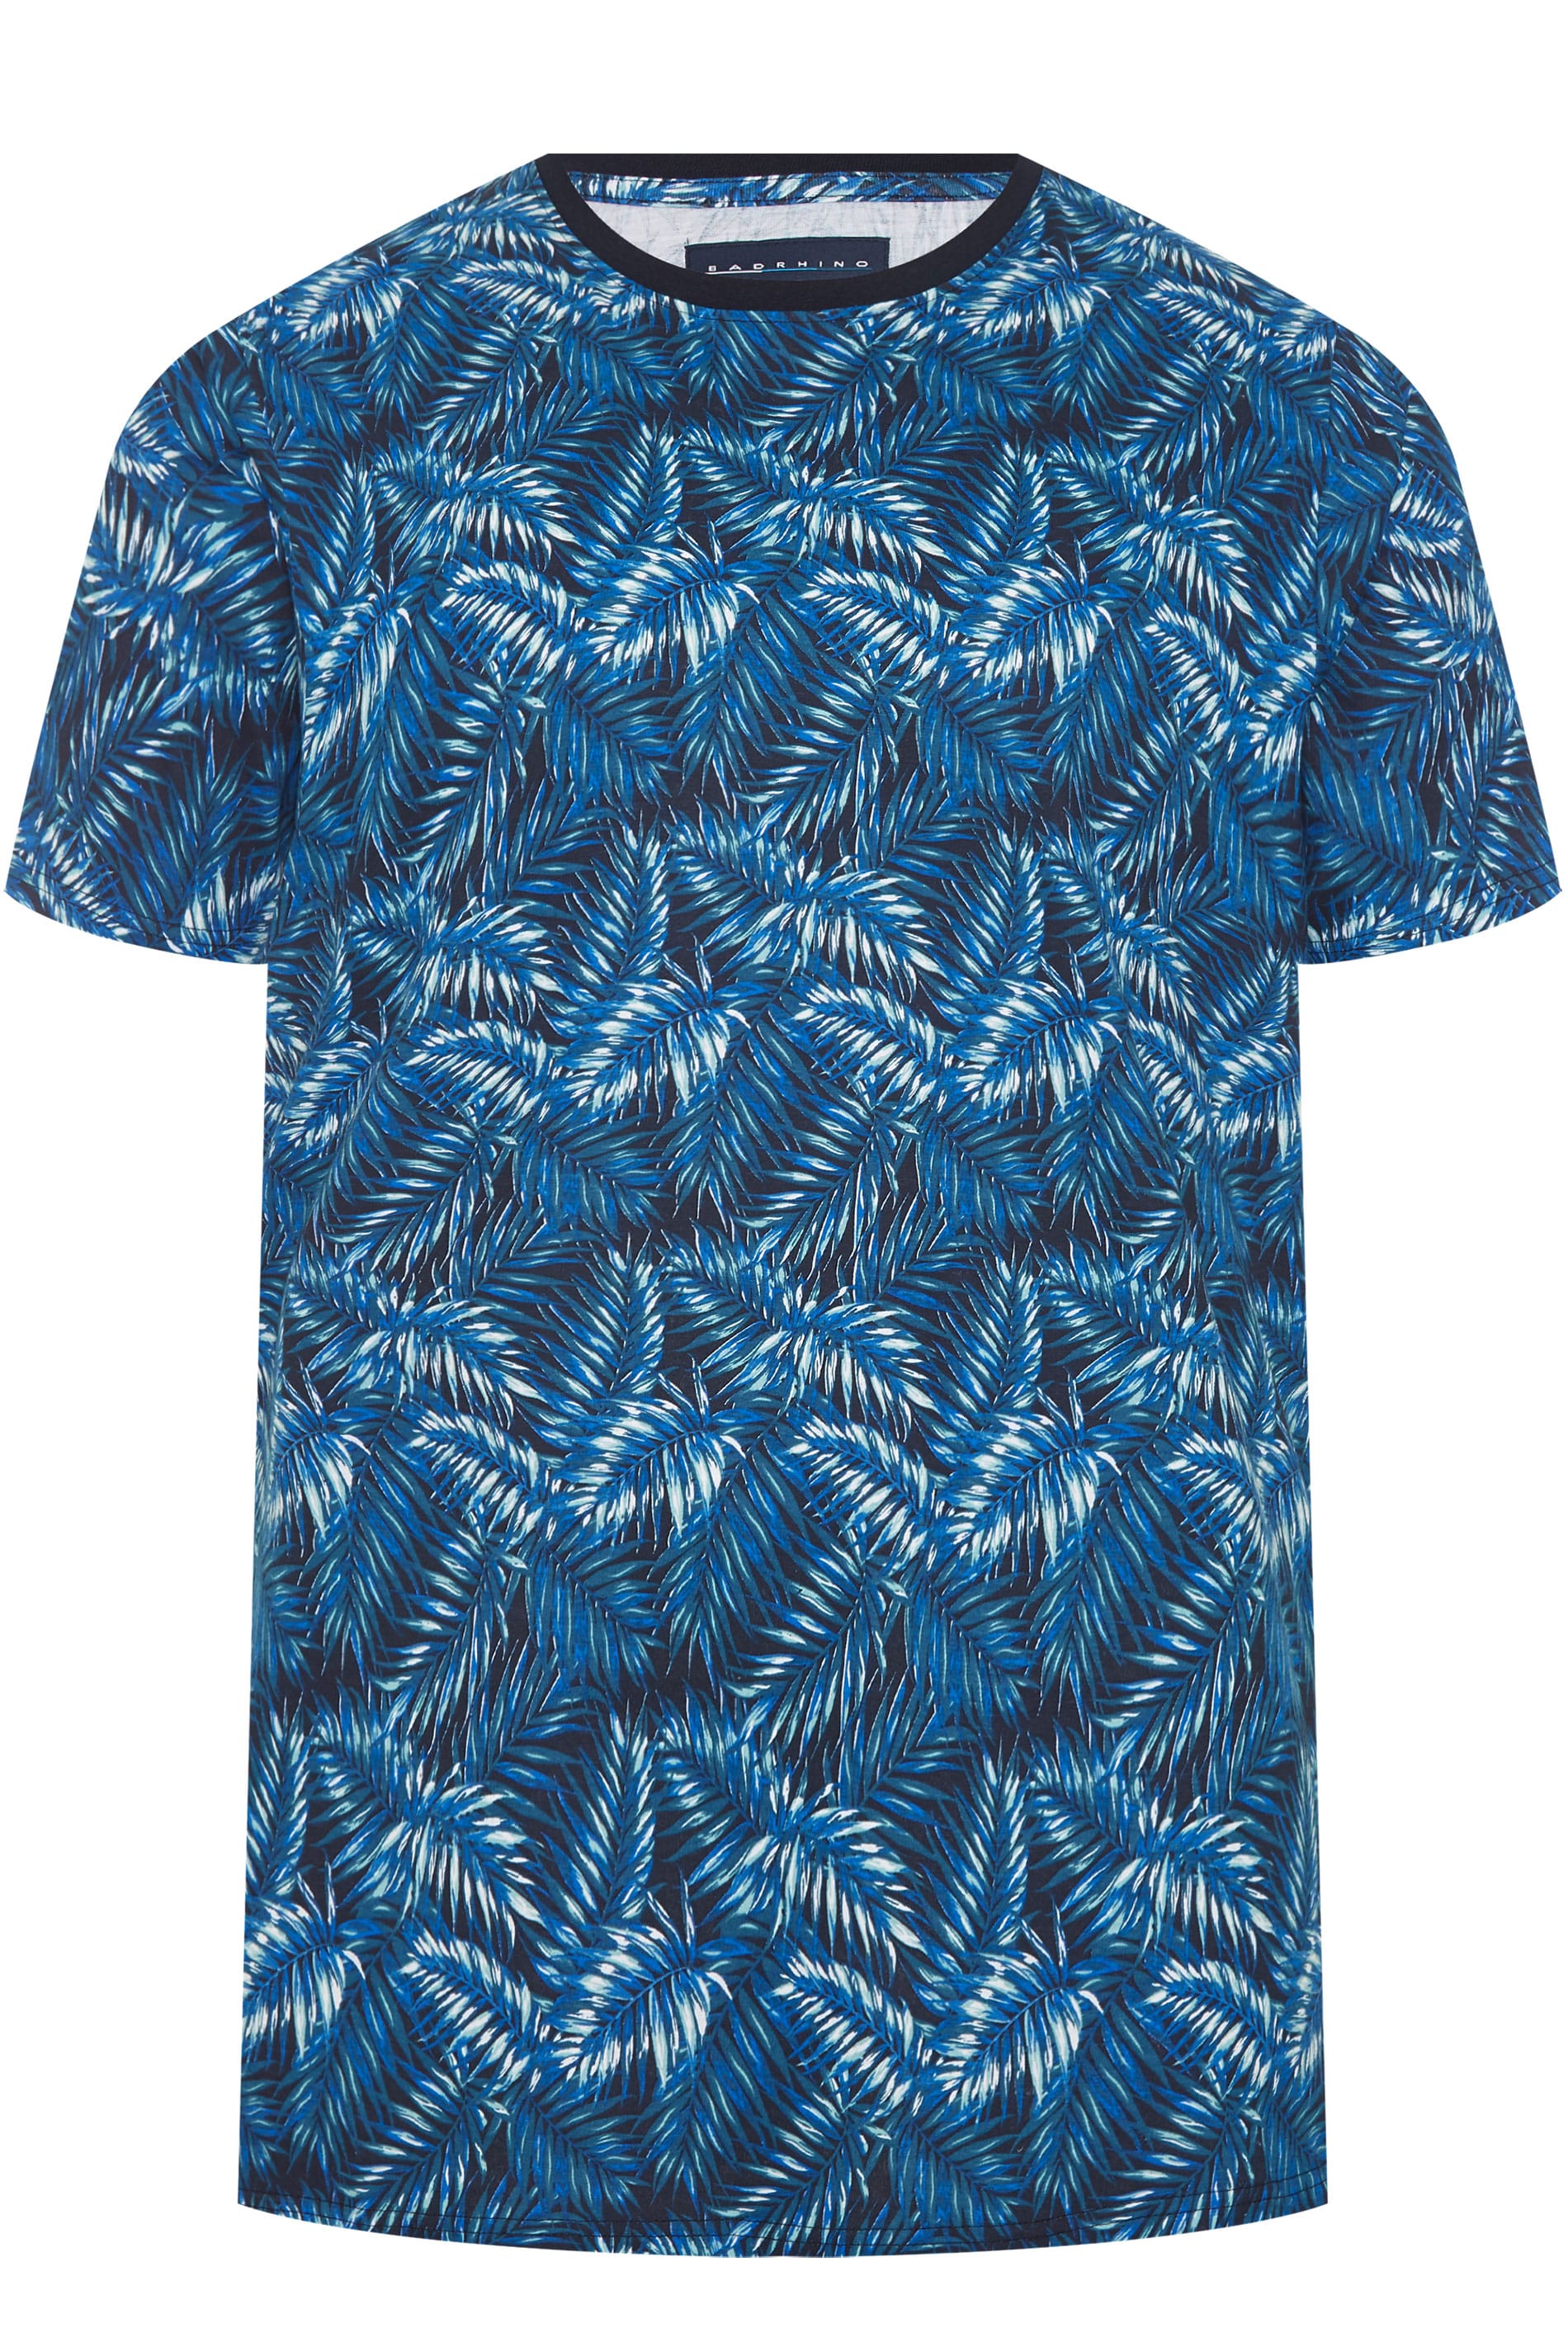 BadRhino Big & Tall Blue Tropical Leaf Print T-Shirt 1